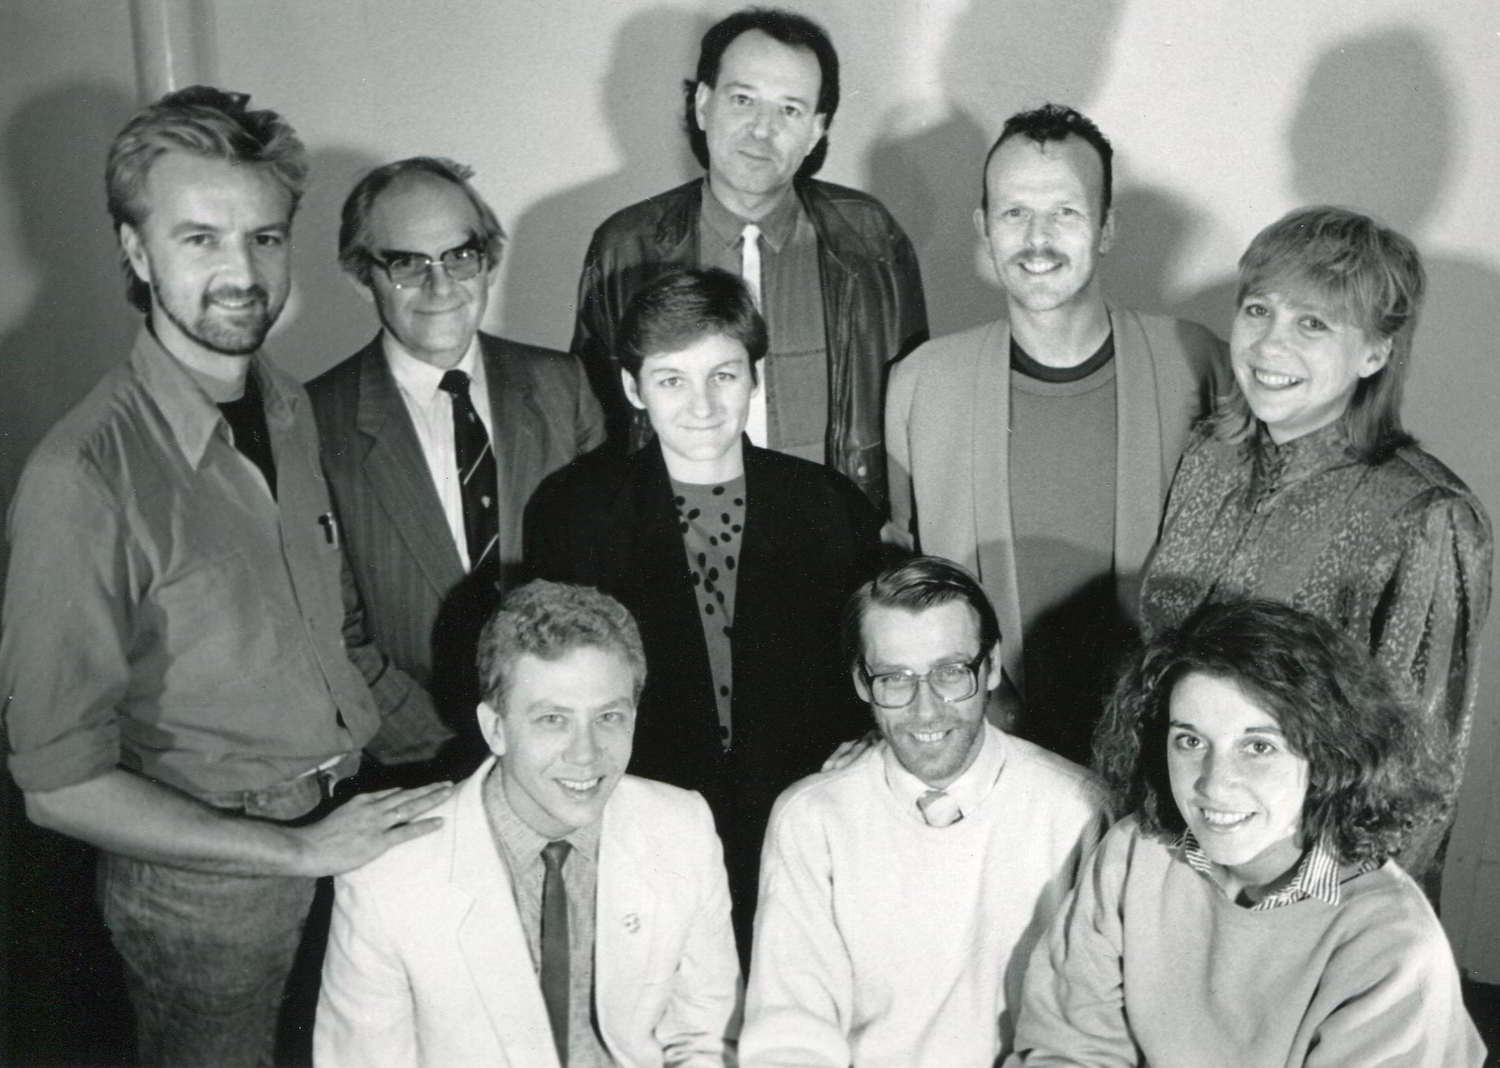 Handspan Theatre Board 1987 portrait of people in a group